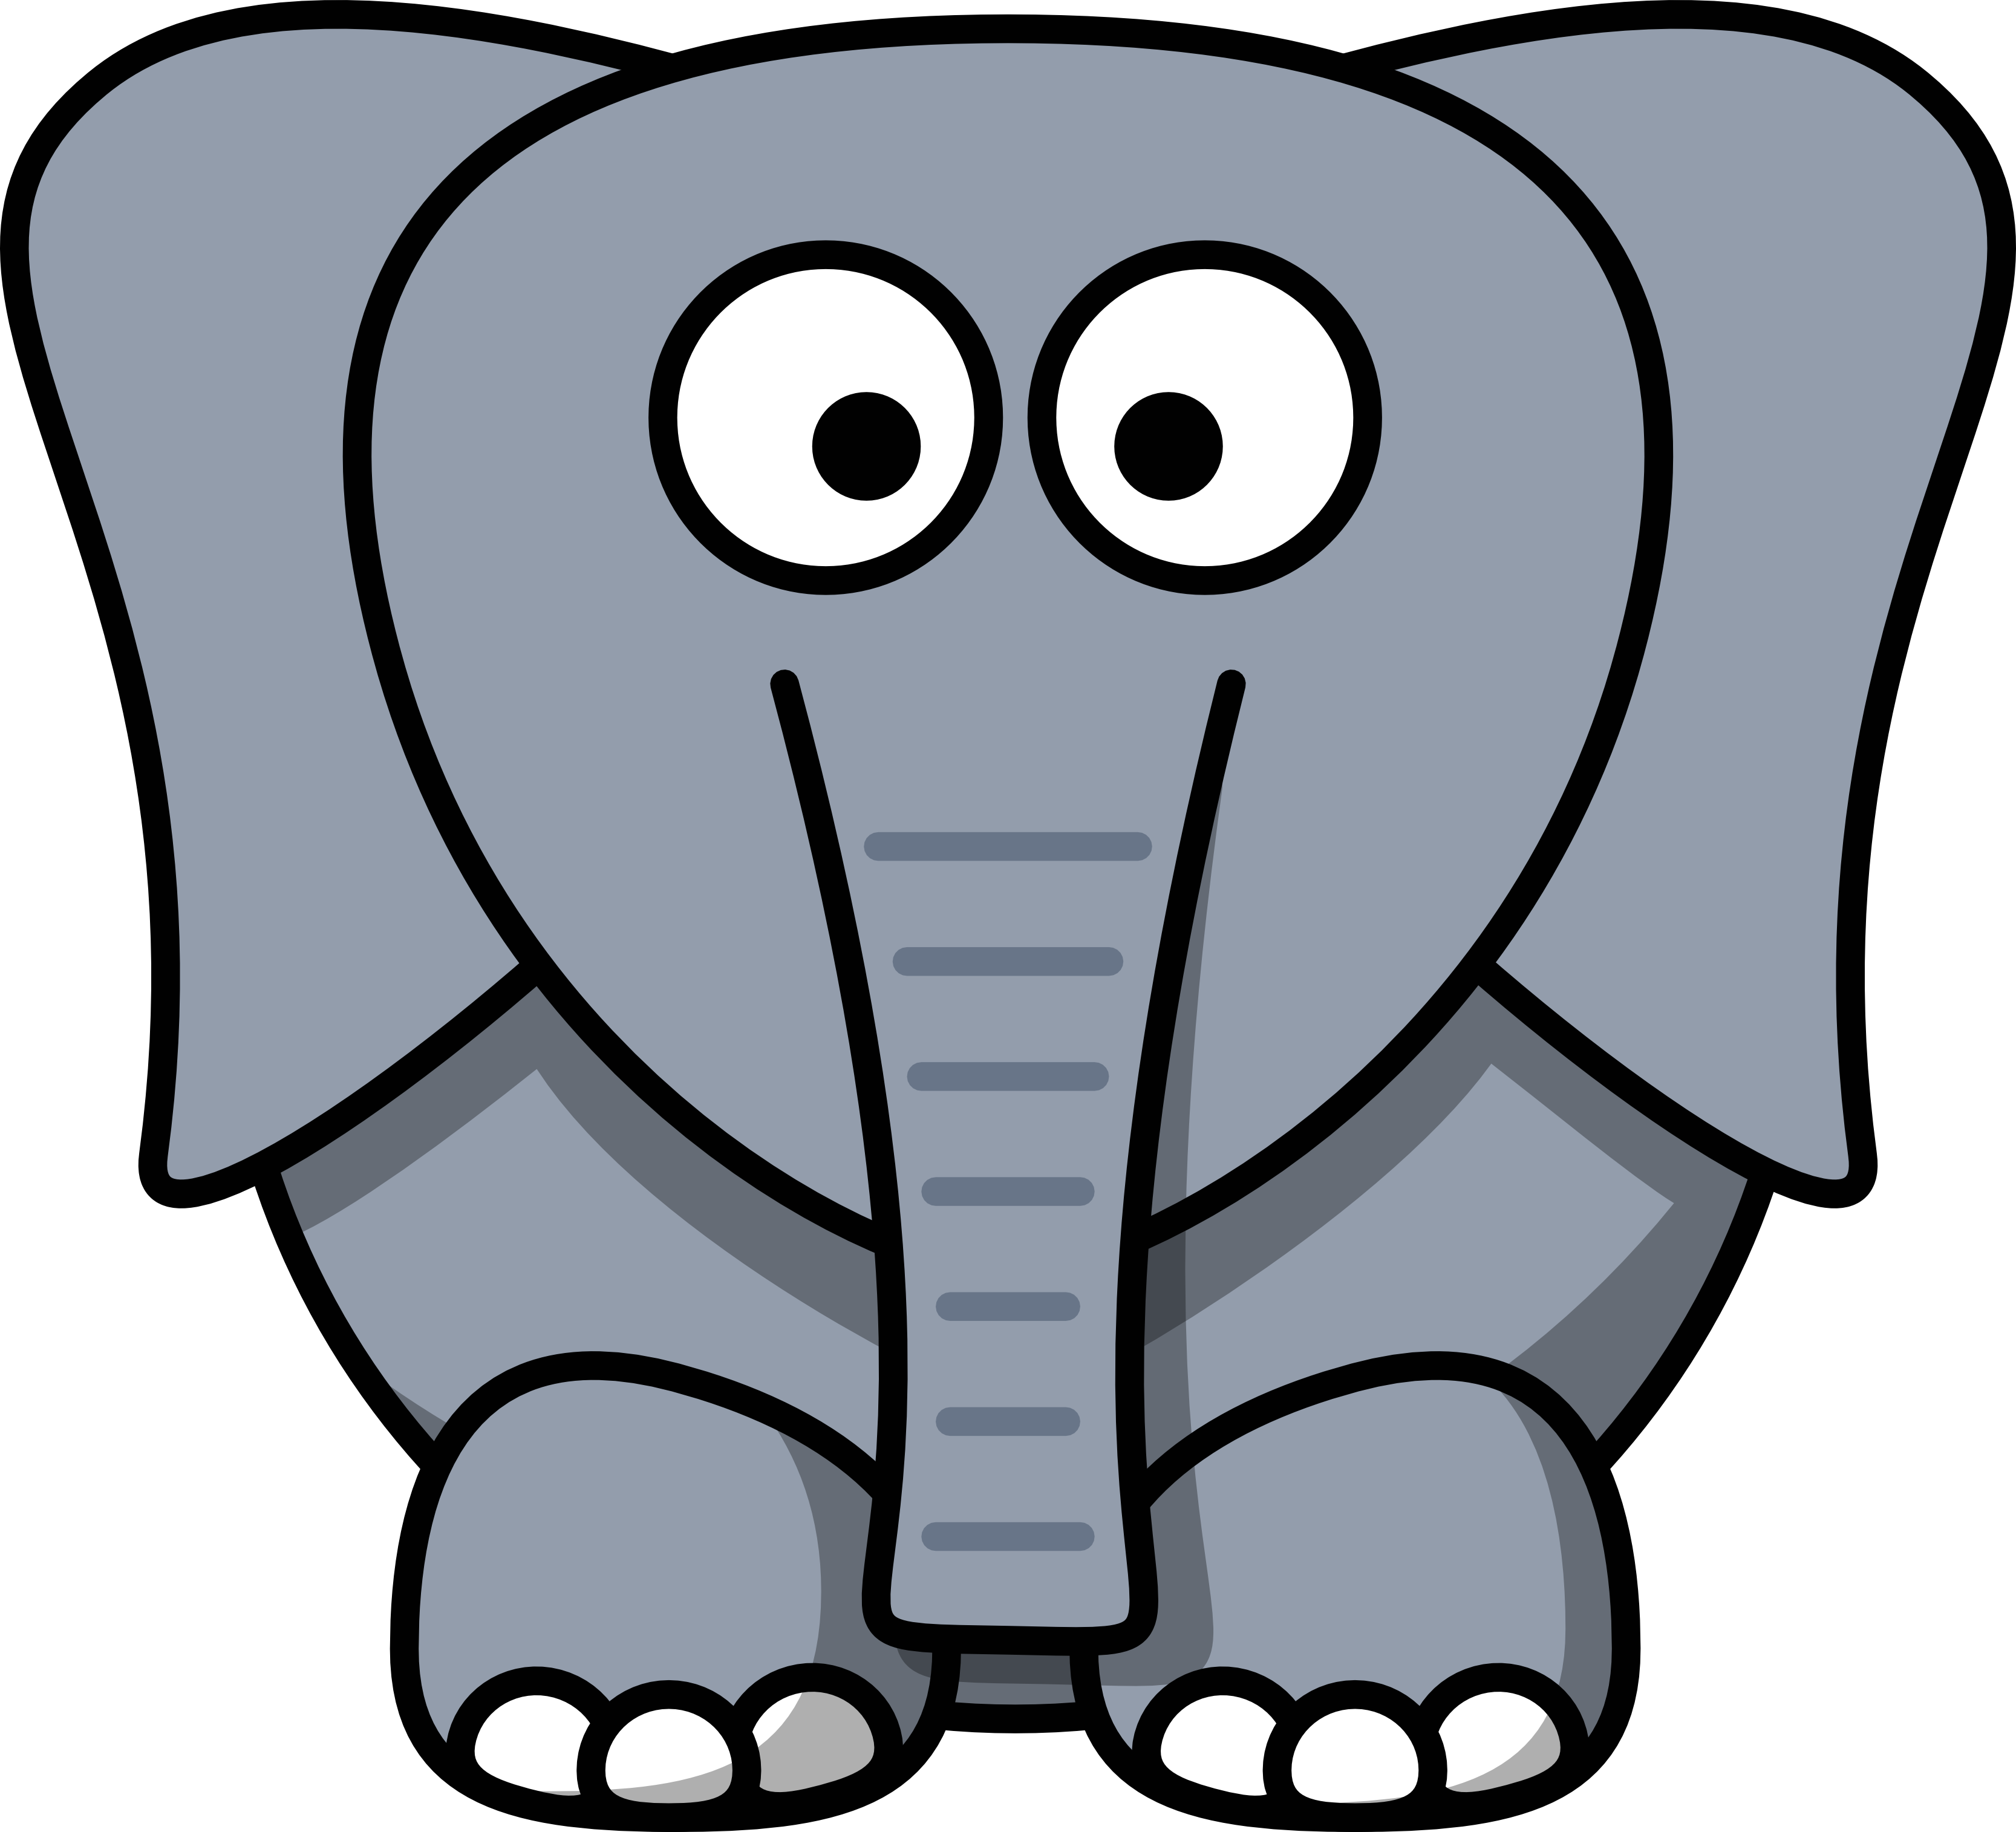 Images Of Cartoon Elephants - ClipArt Best